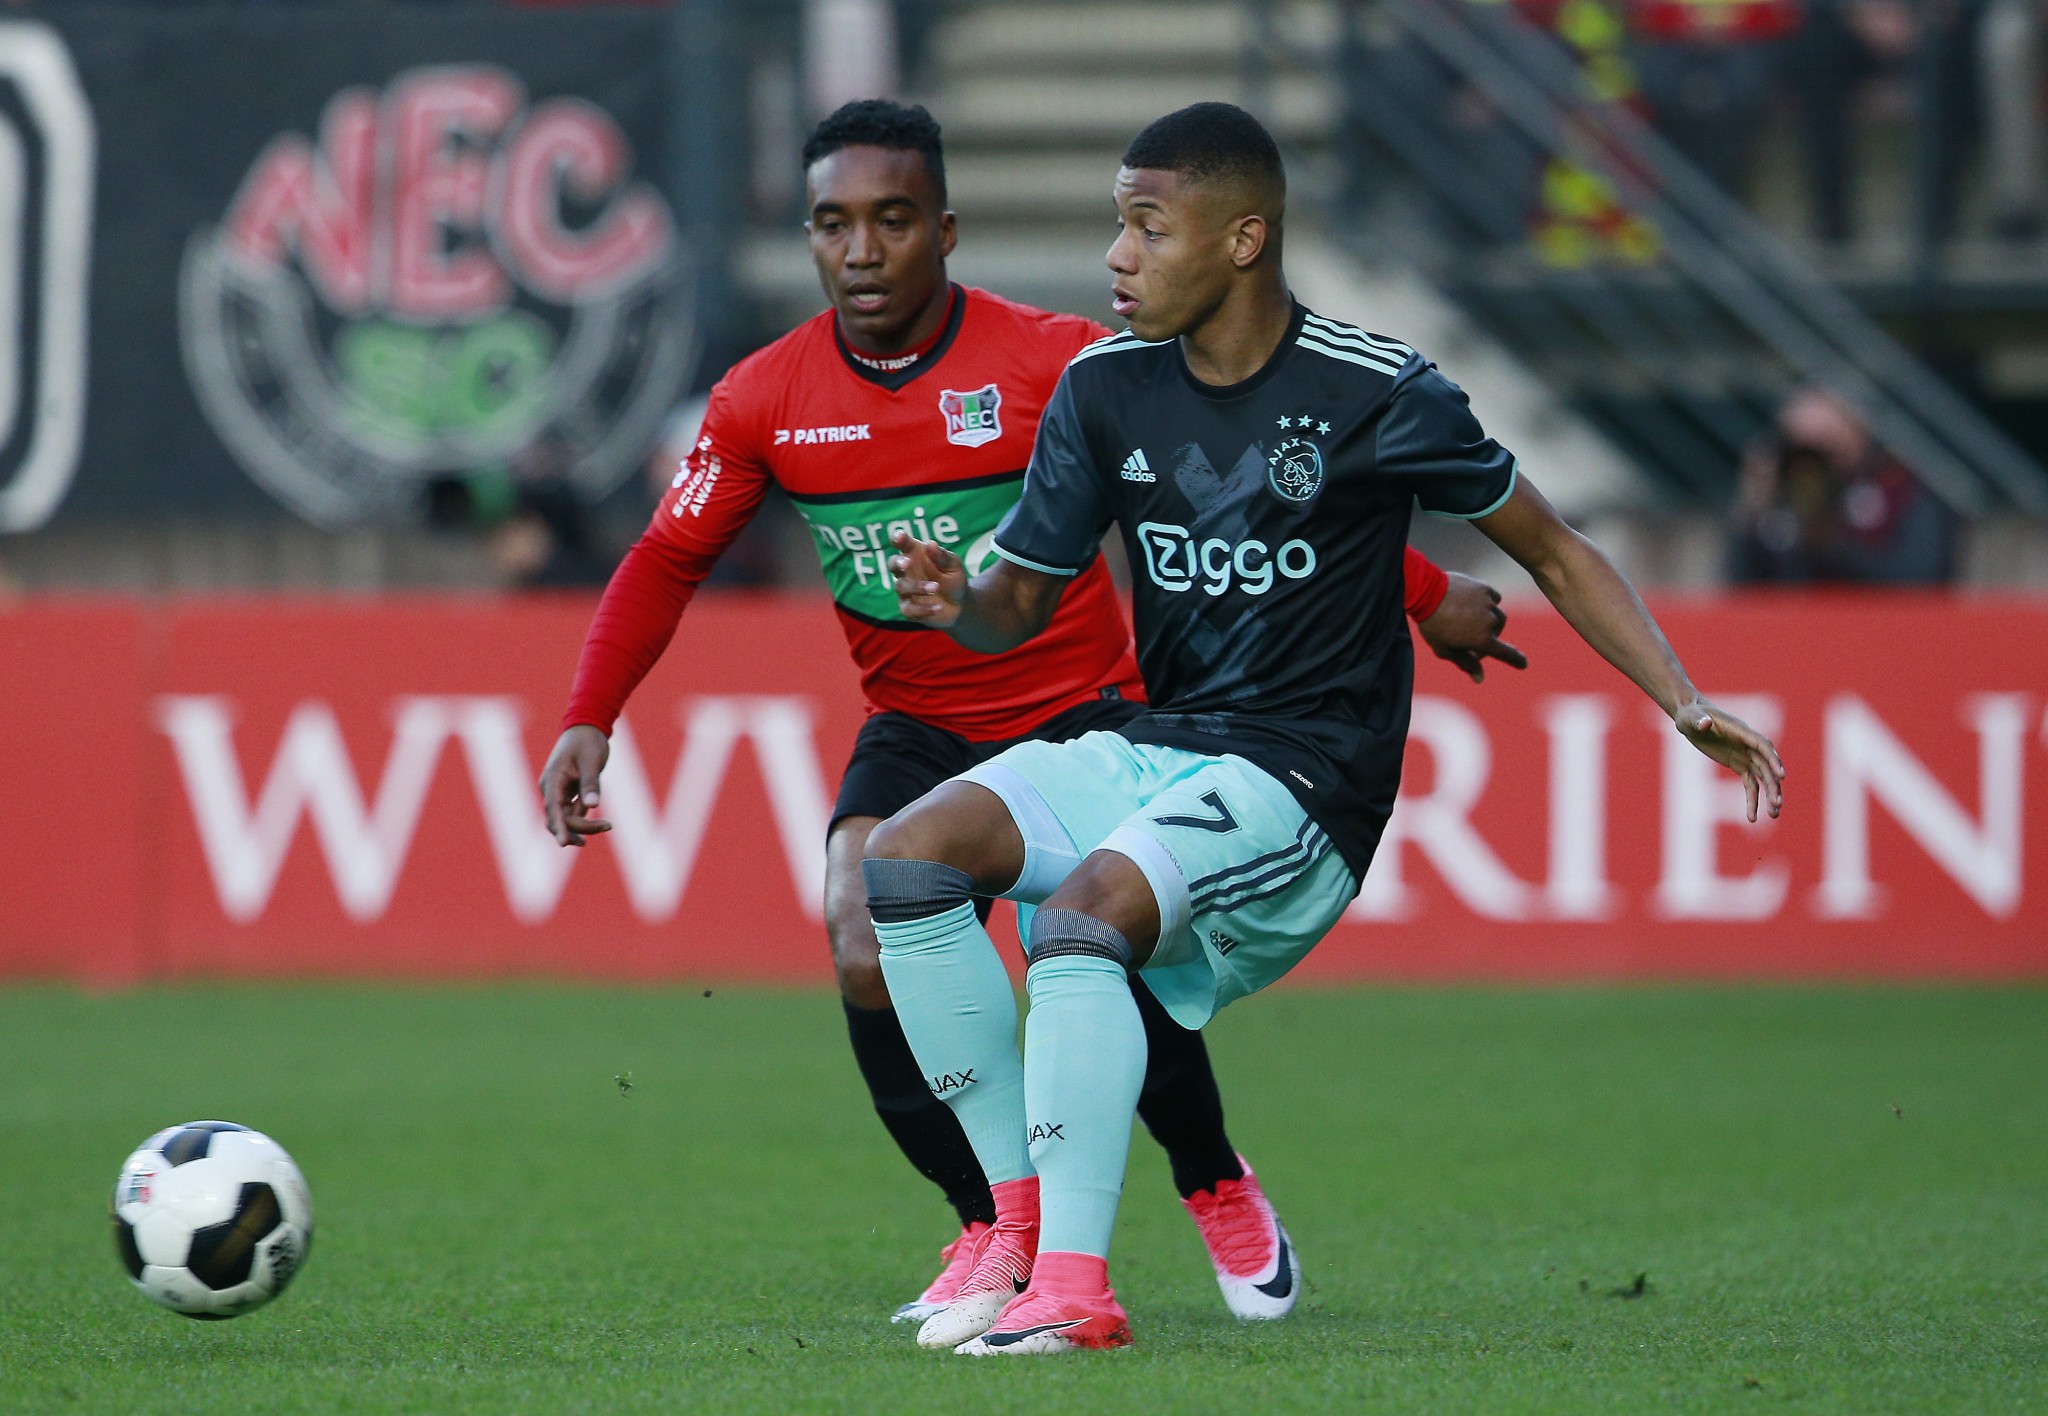 Ruime nederlaag tegen Ajax: 1-5